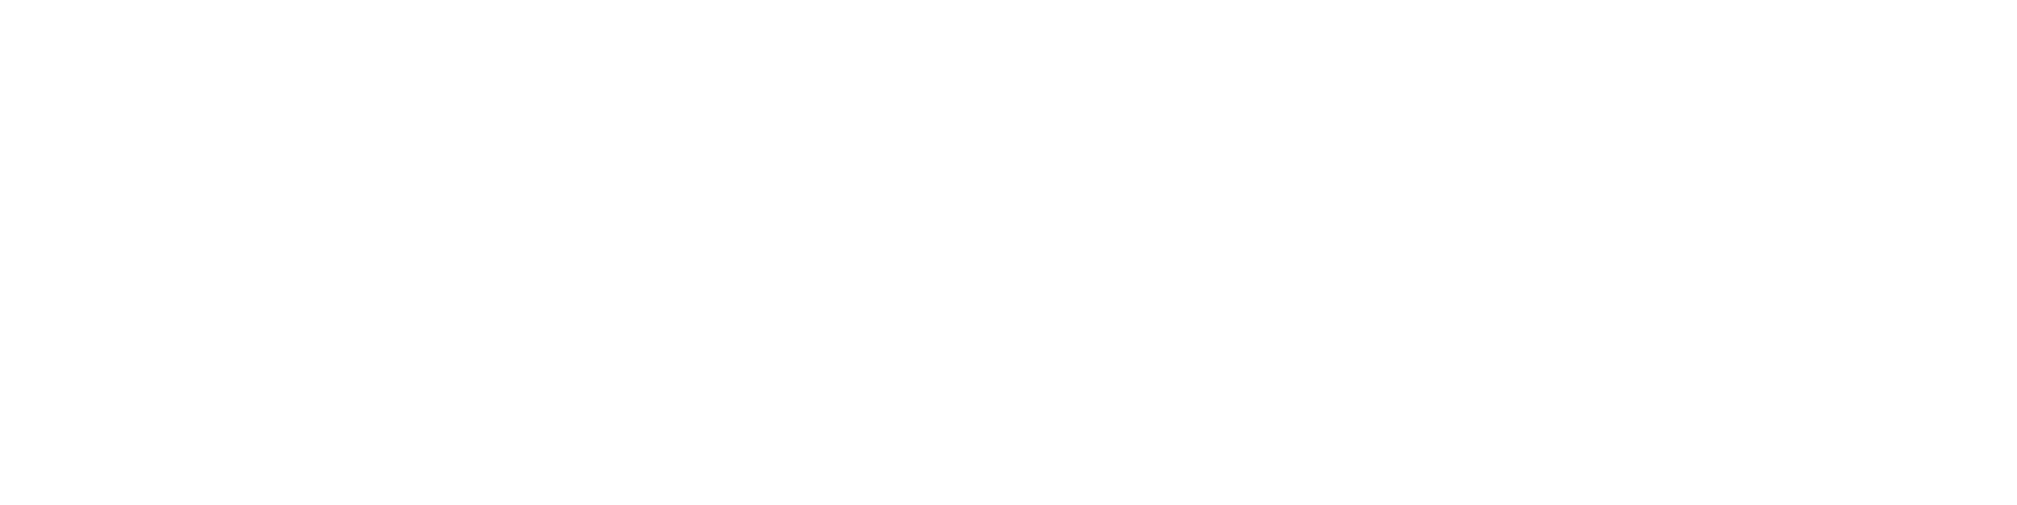 mazodor white logo